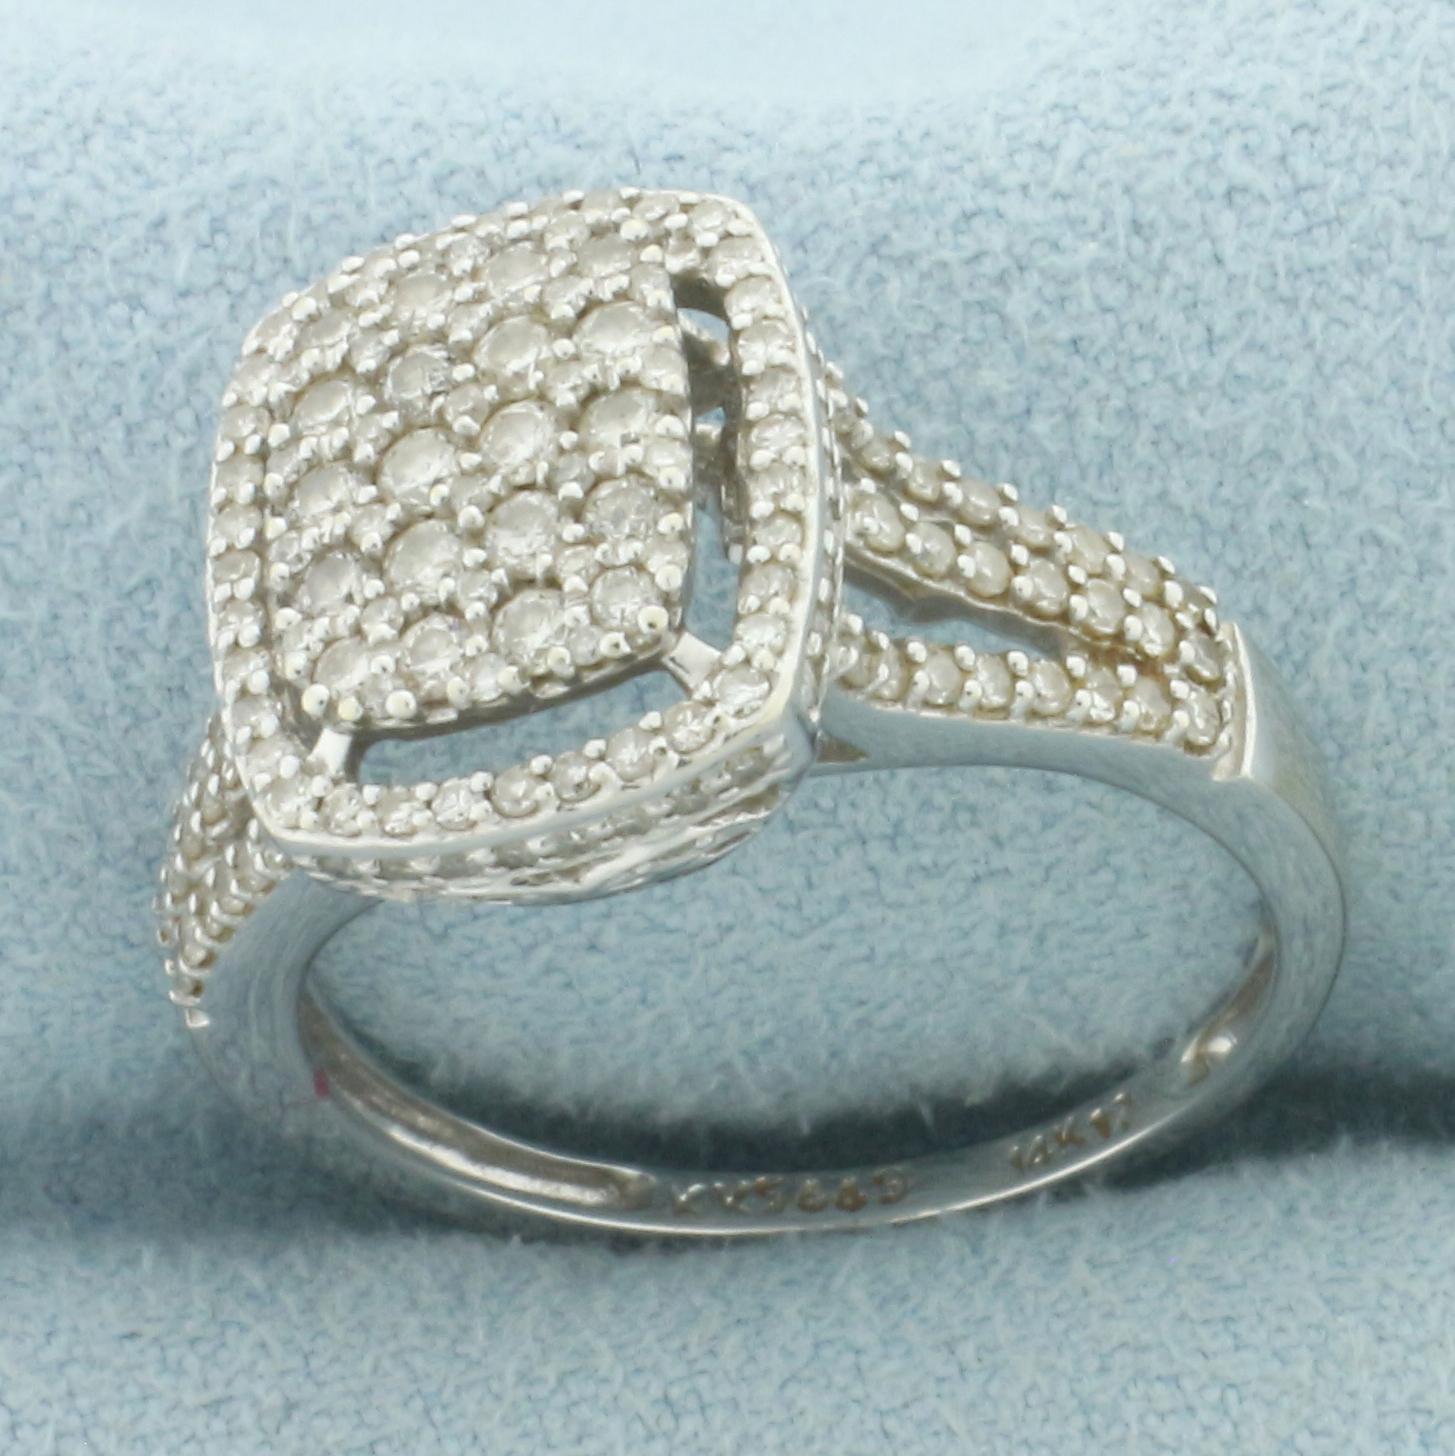 Halo Design Pave Set Diamond Ring In 14k White Gold.